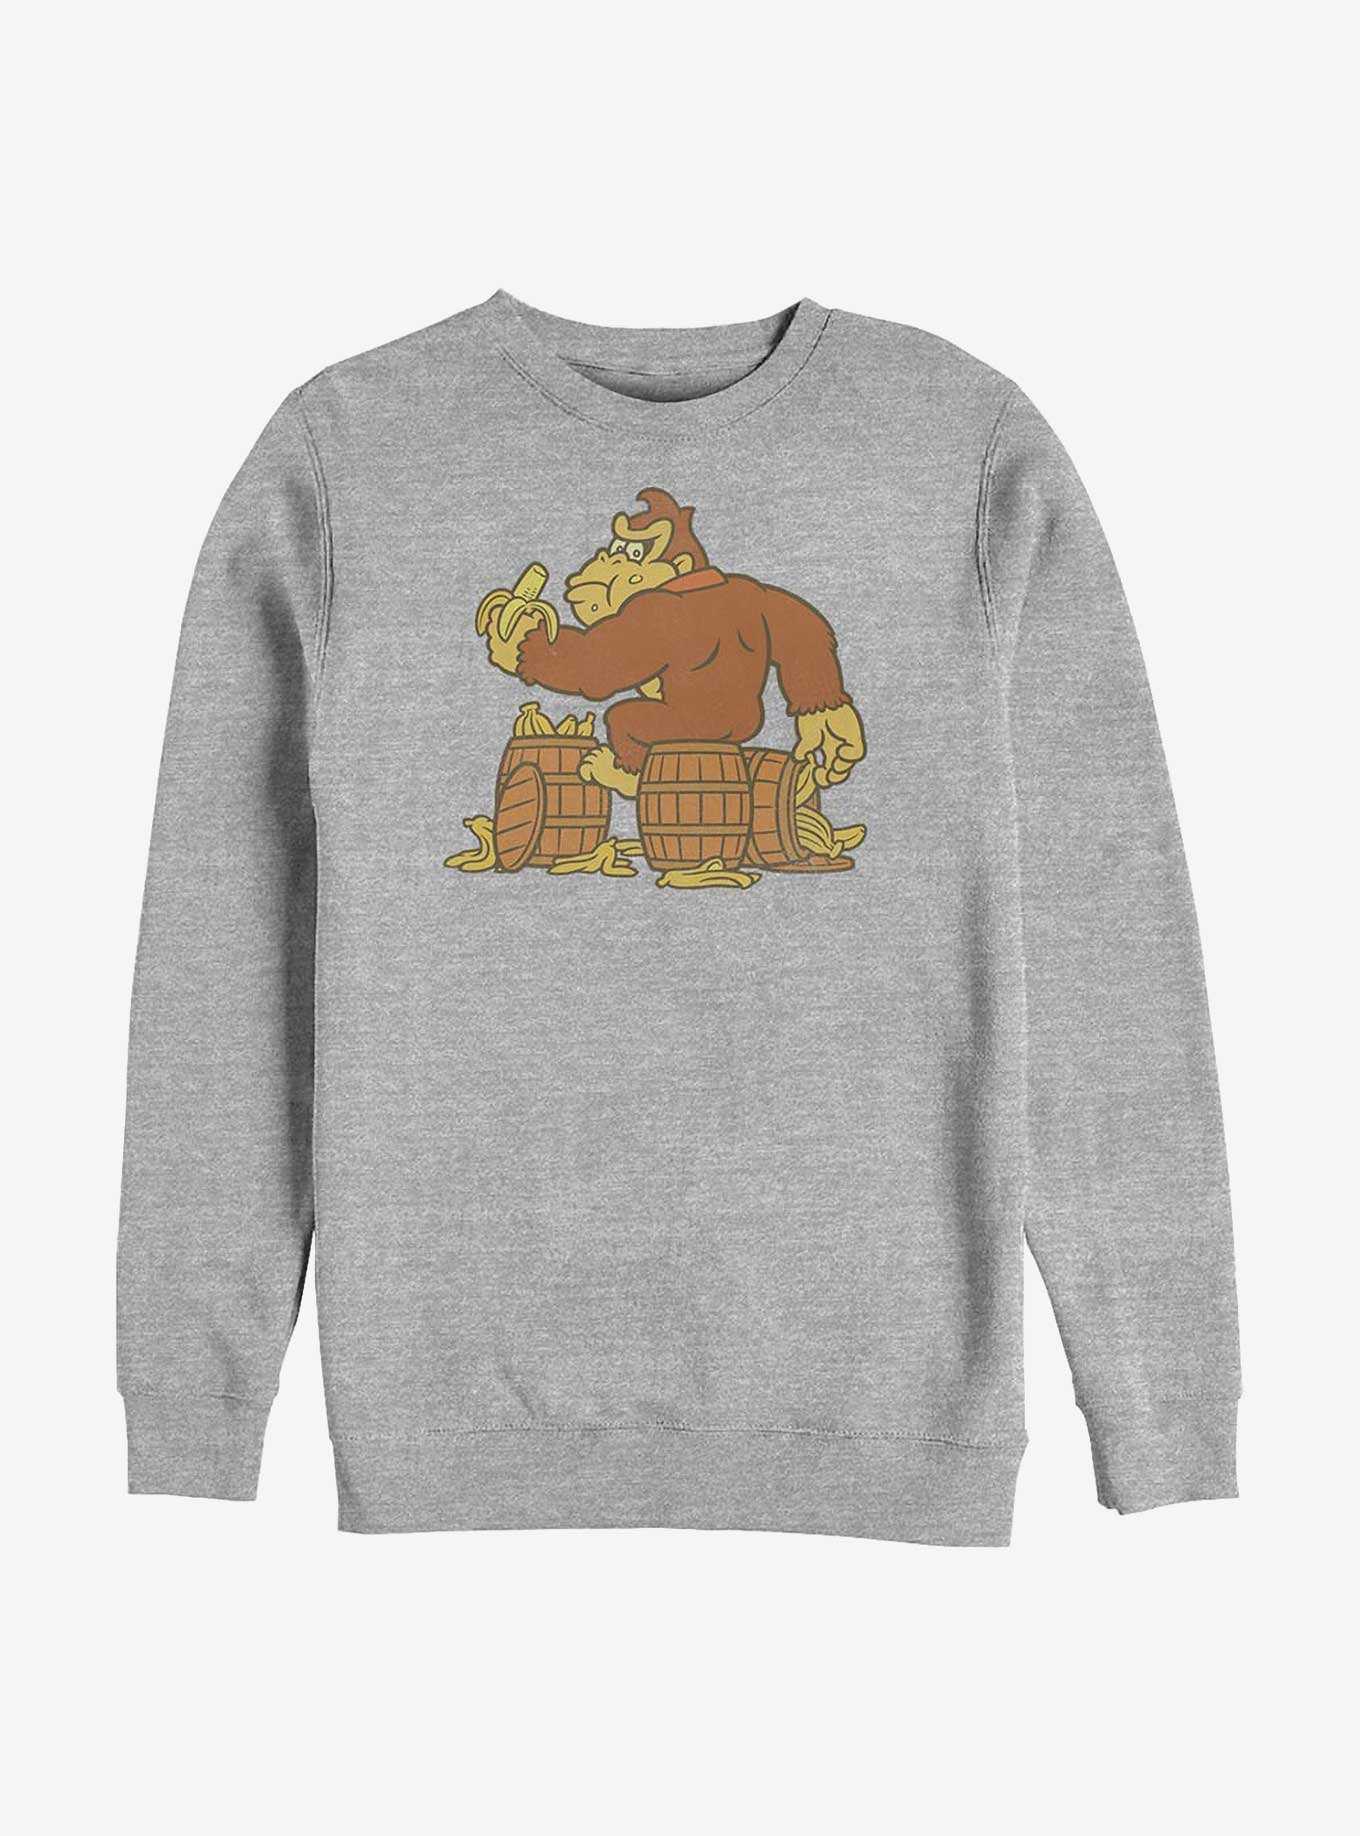 Nintendo Donkey Kong Banana Barrel Sweatshirt, , hi-res